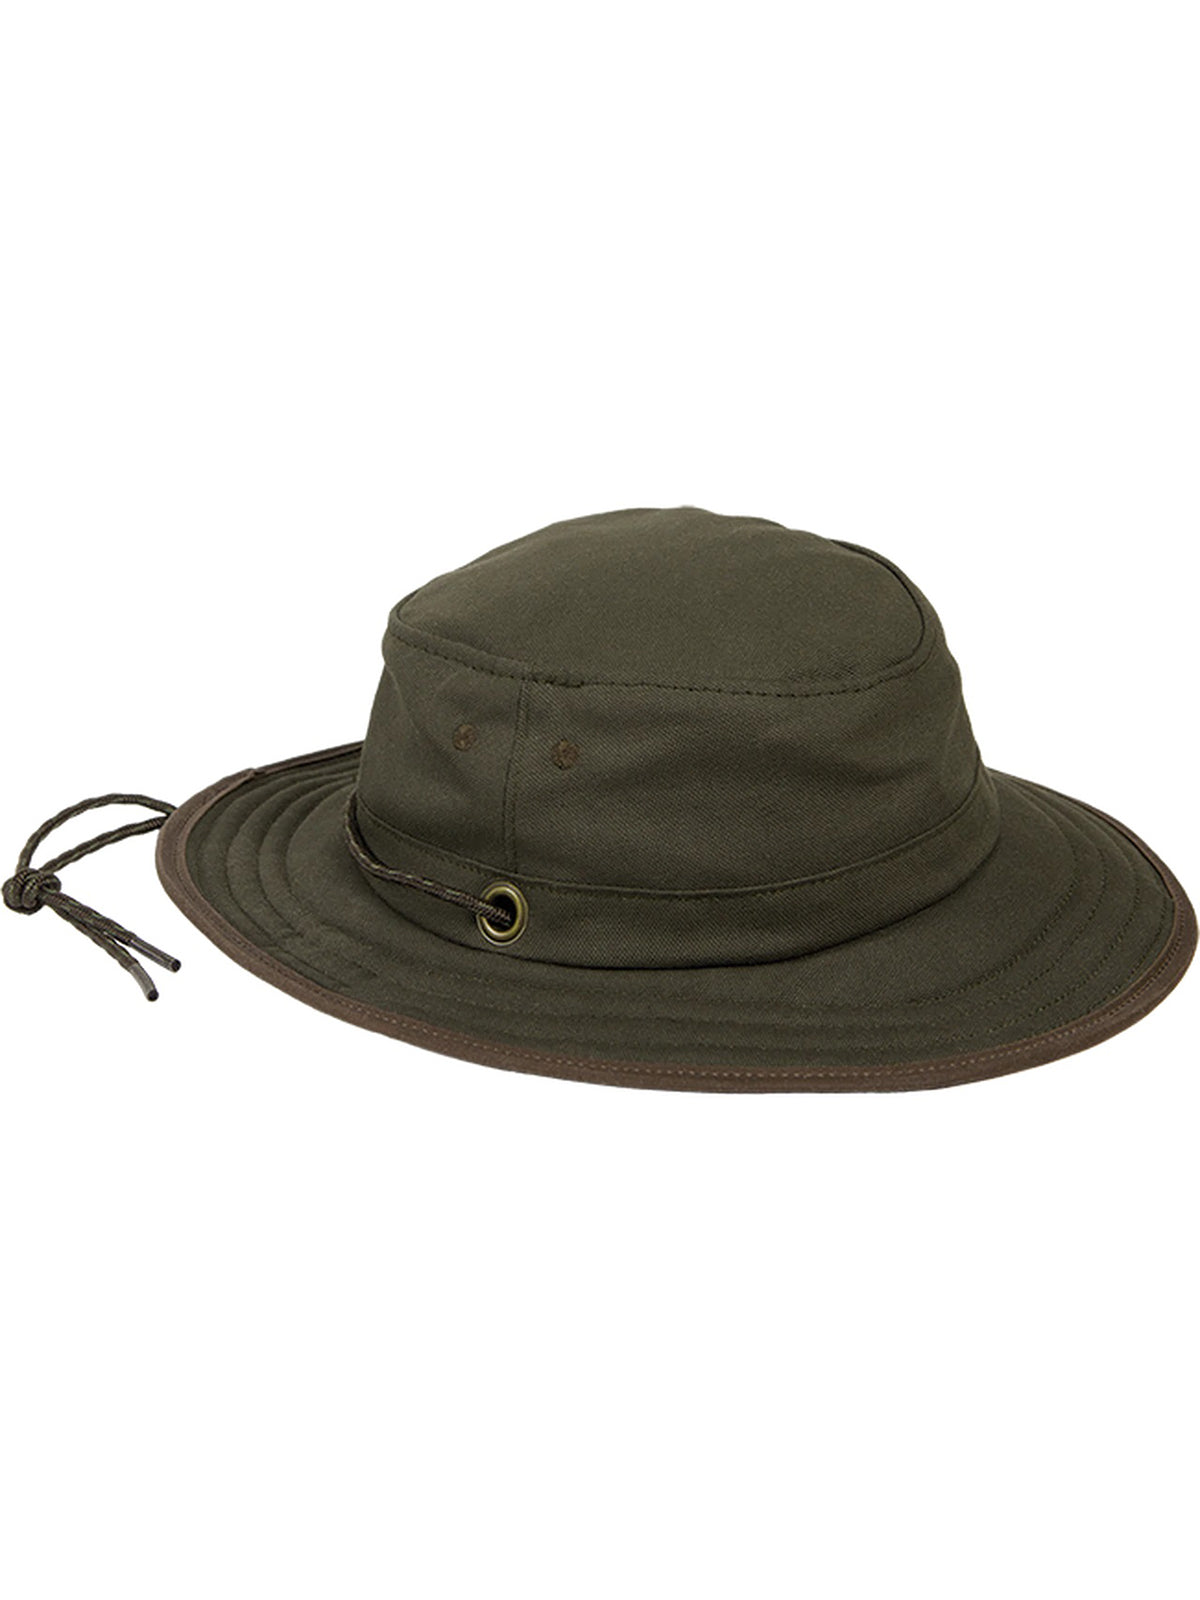 Stormy Kromer Cruiser Hat in Army Green